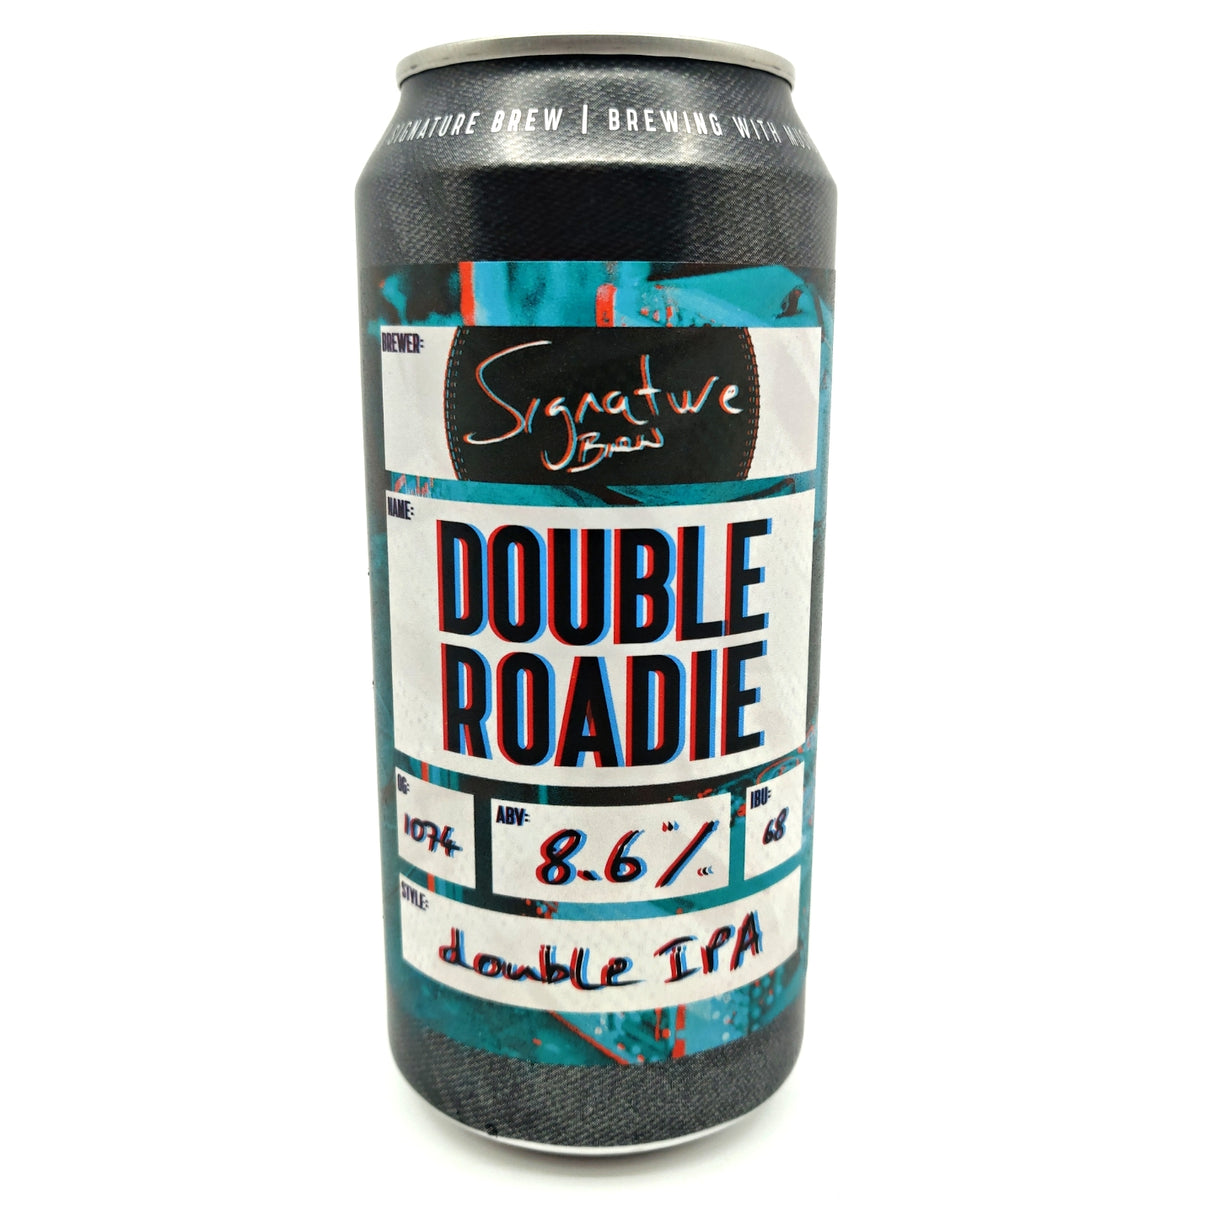 Signature Brew Double Roadie Double IPA 8.6% (440ml can)-Hop Burns & Black